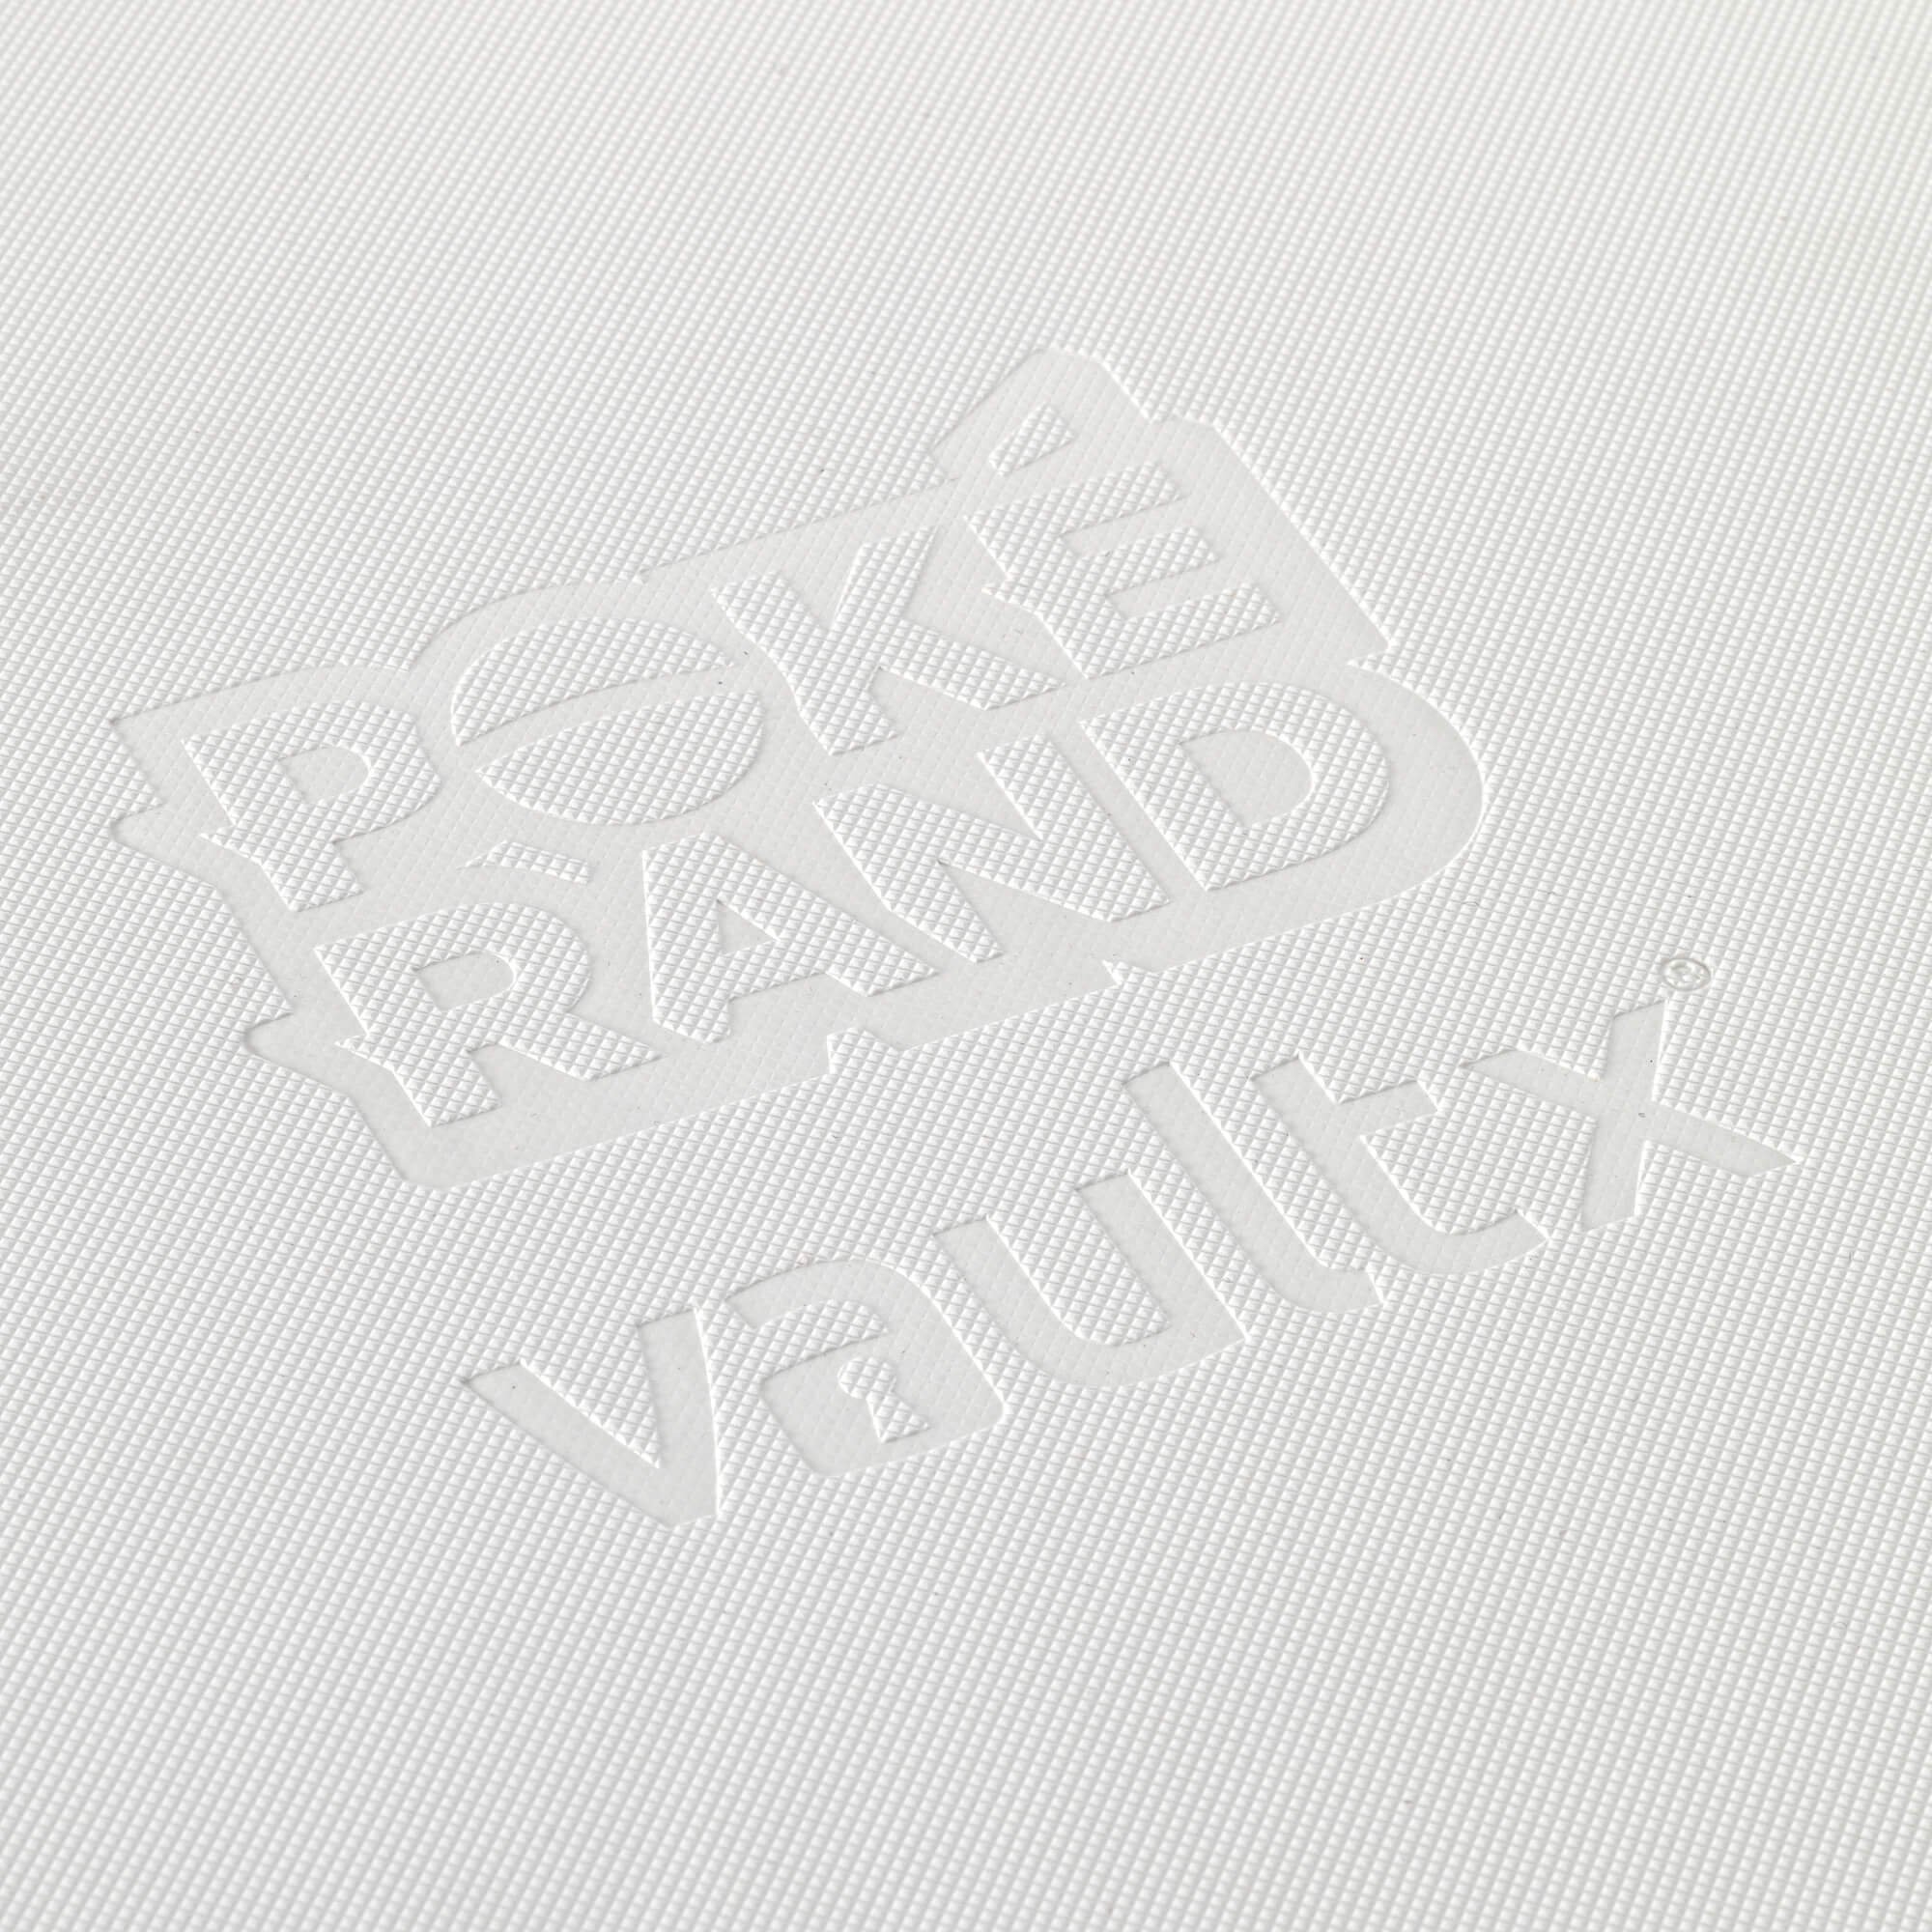 PokeRand Vault X Premium eXo-Tec® 12 Pocket Zip Binder - Side Loading for TCG - PokeRand